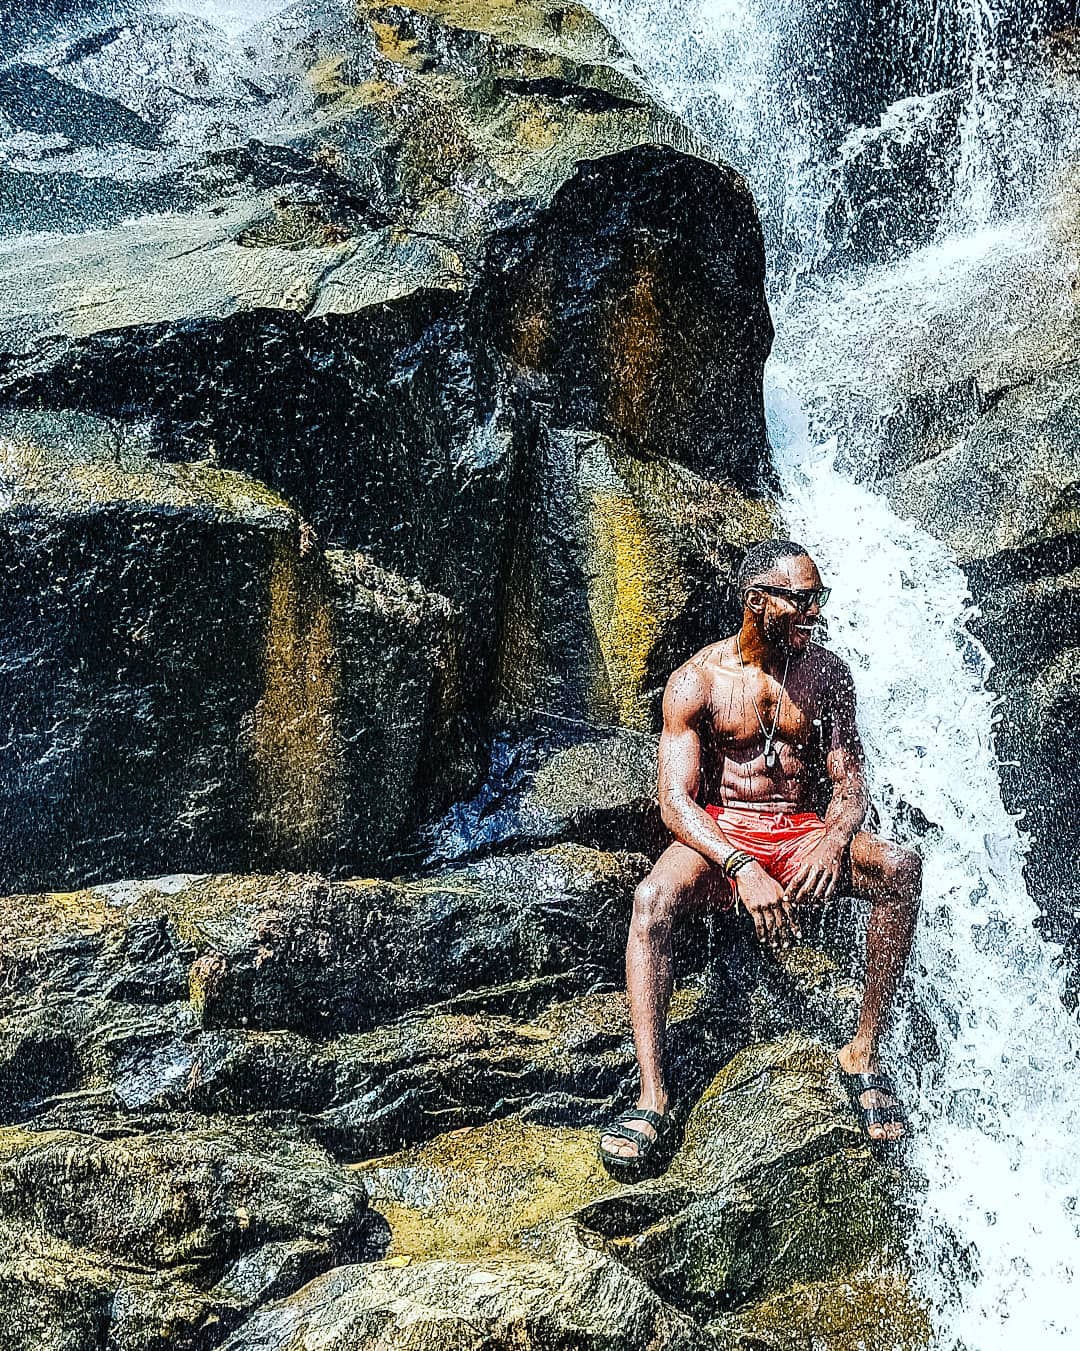 waterfalls in nigeria: Farin Ruwa Falls